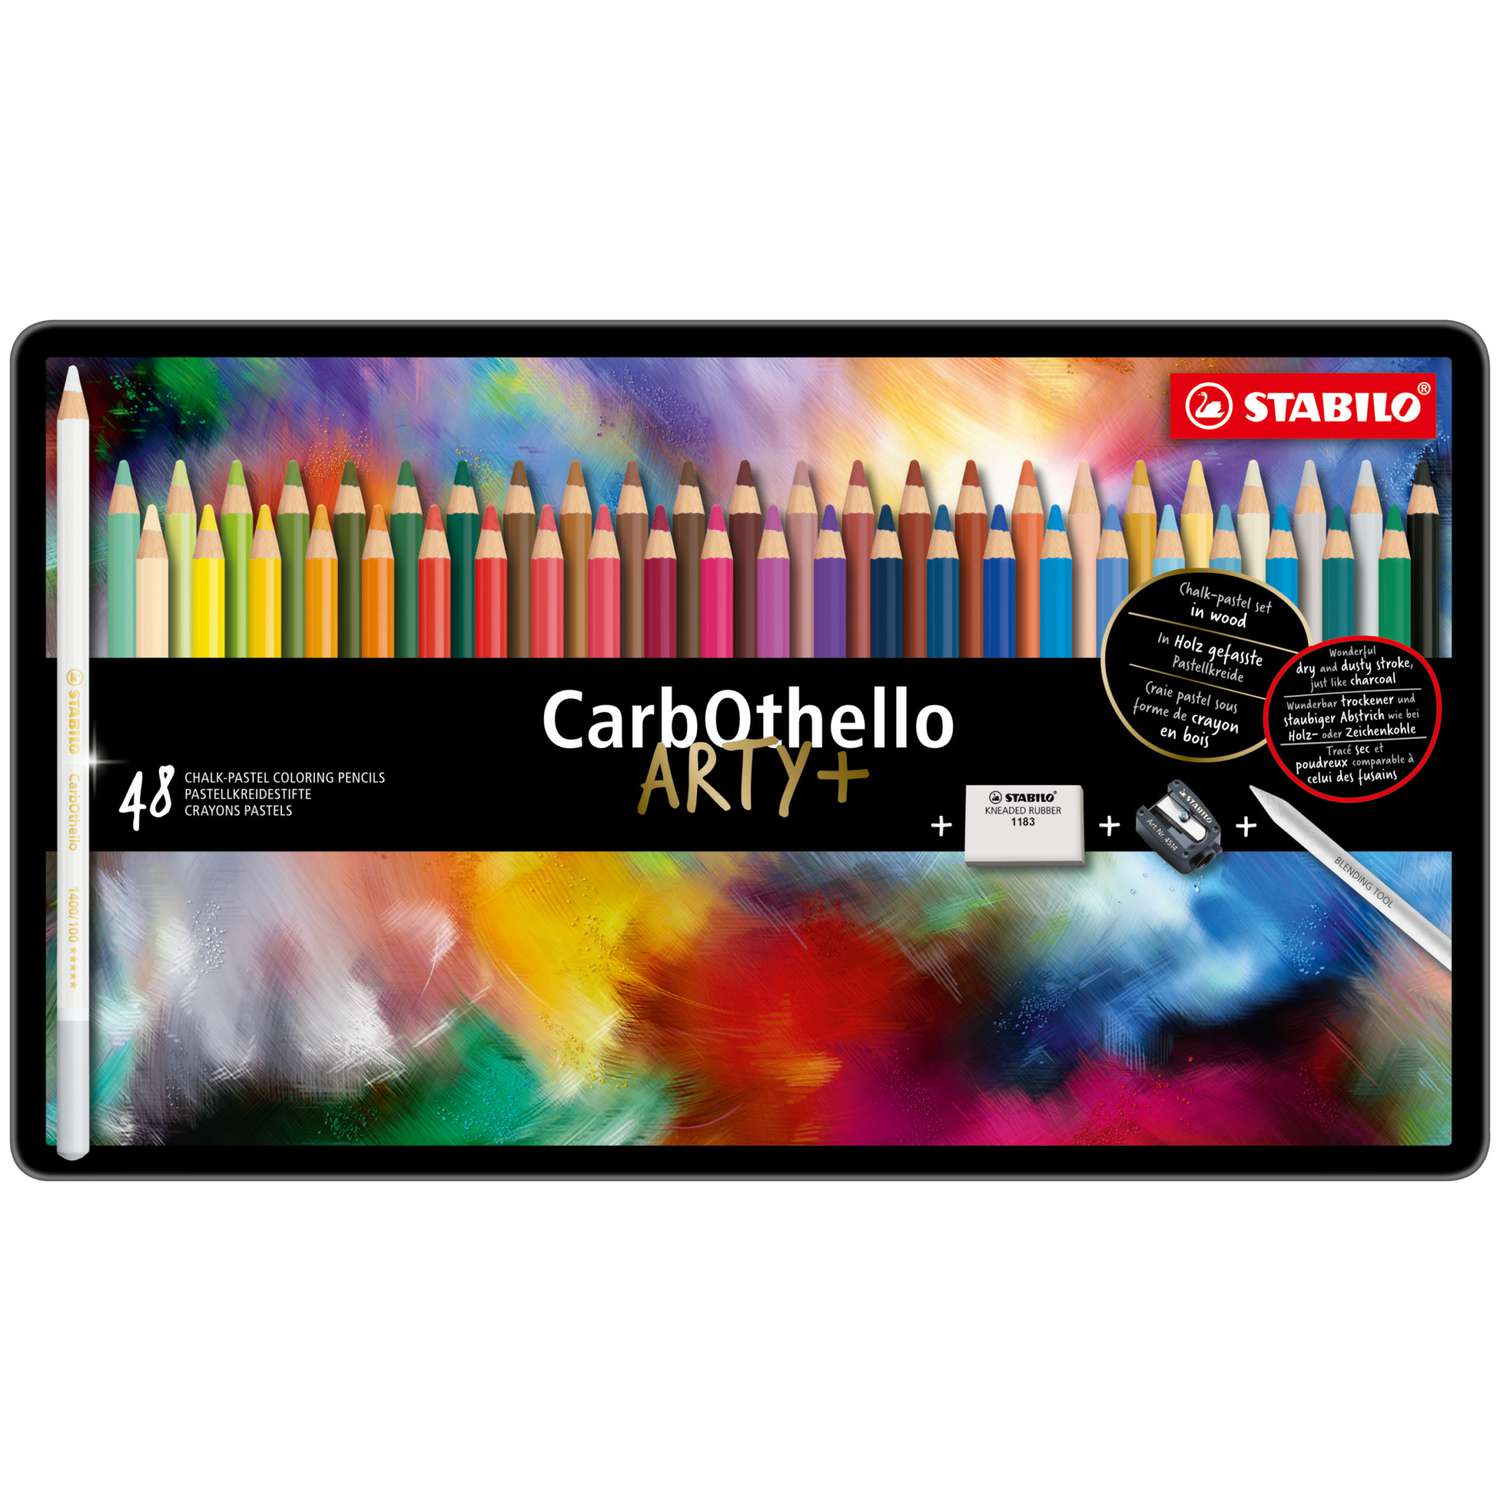 Coffret de crayons pastels Stabilo Carbothello, 24 crayons pastels 26525